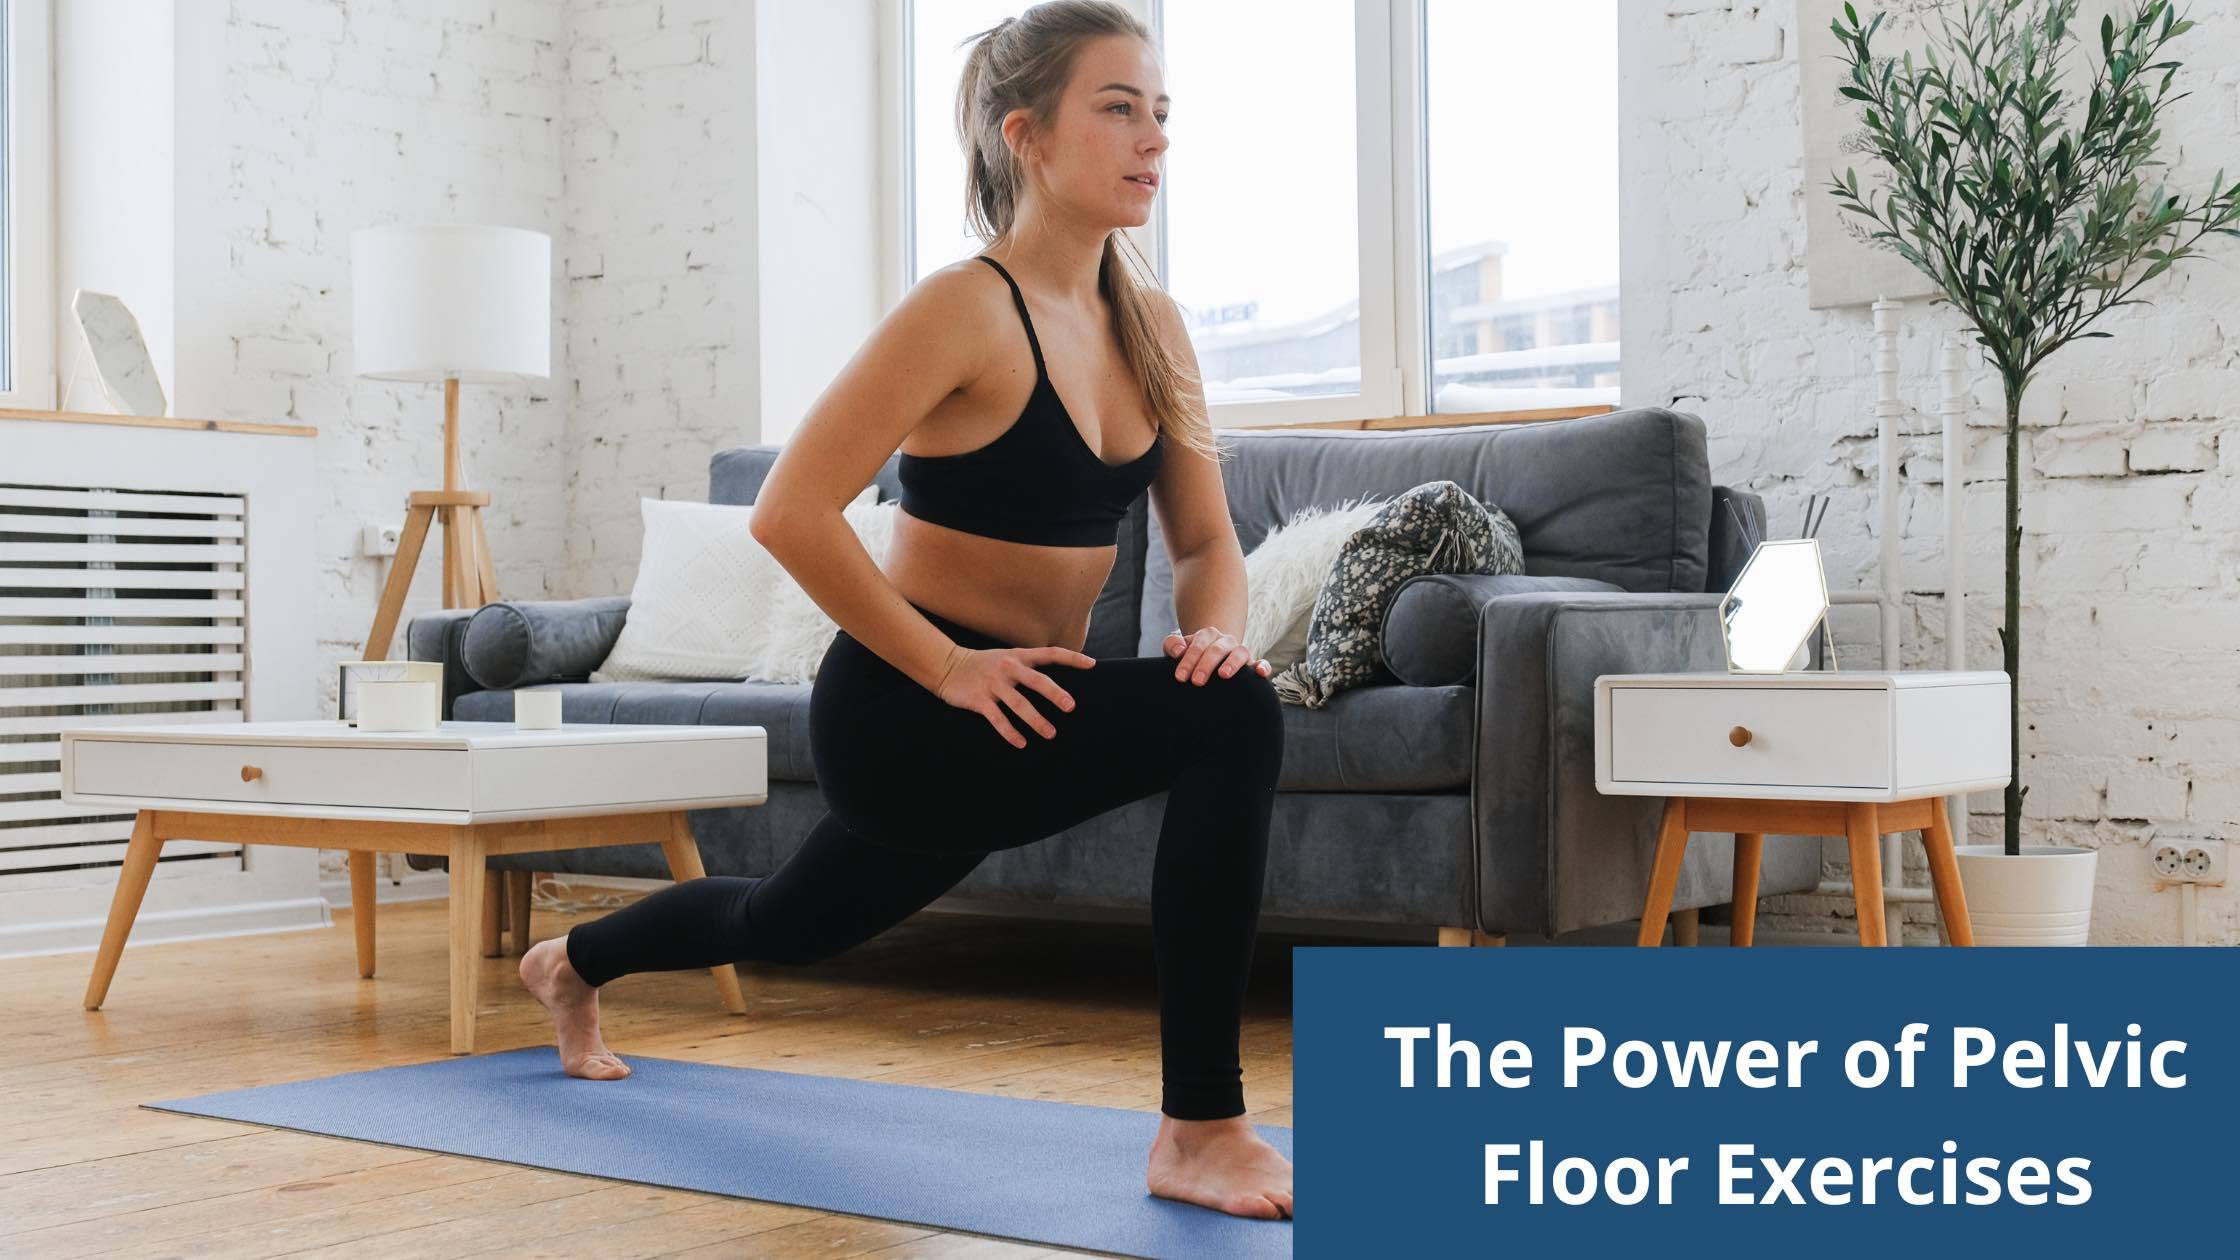 The Power of Pelvic Floor Exercises